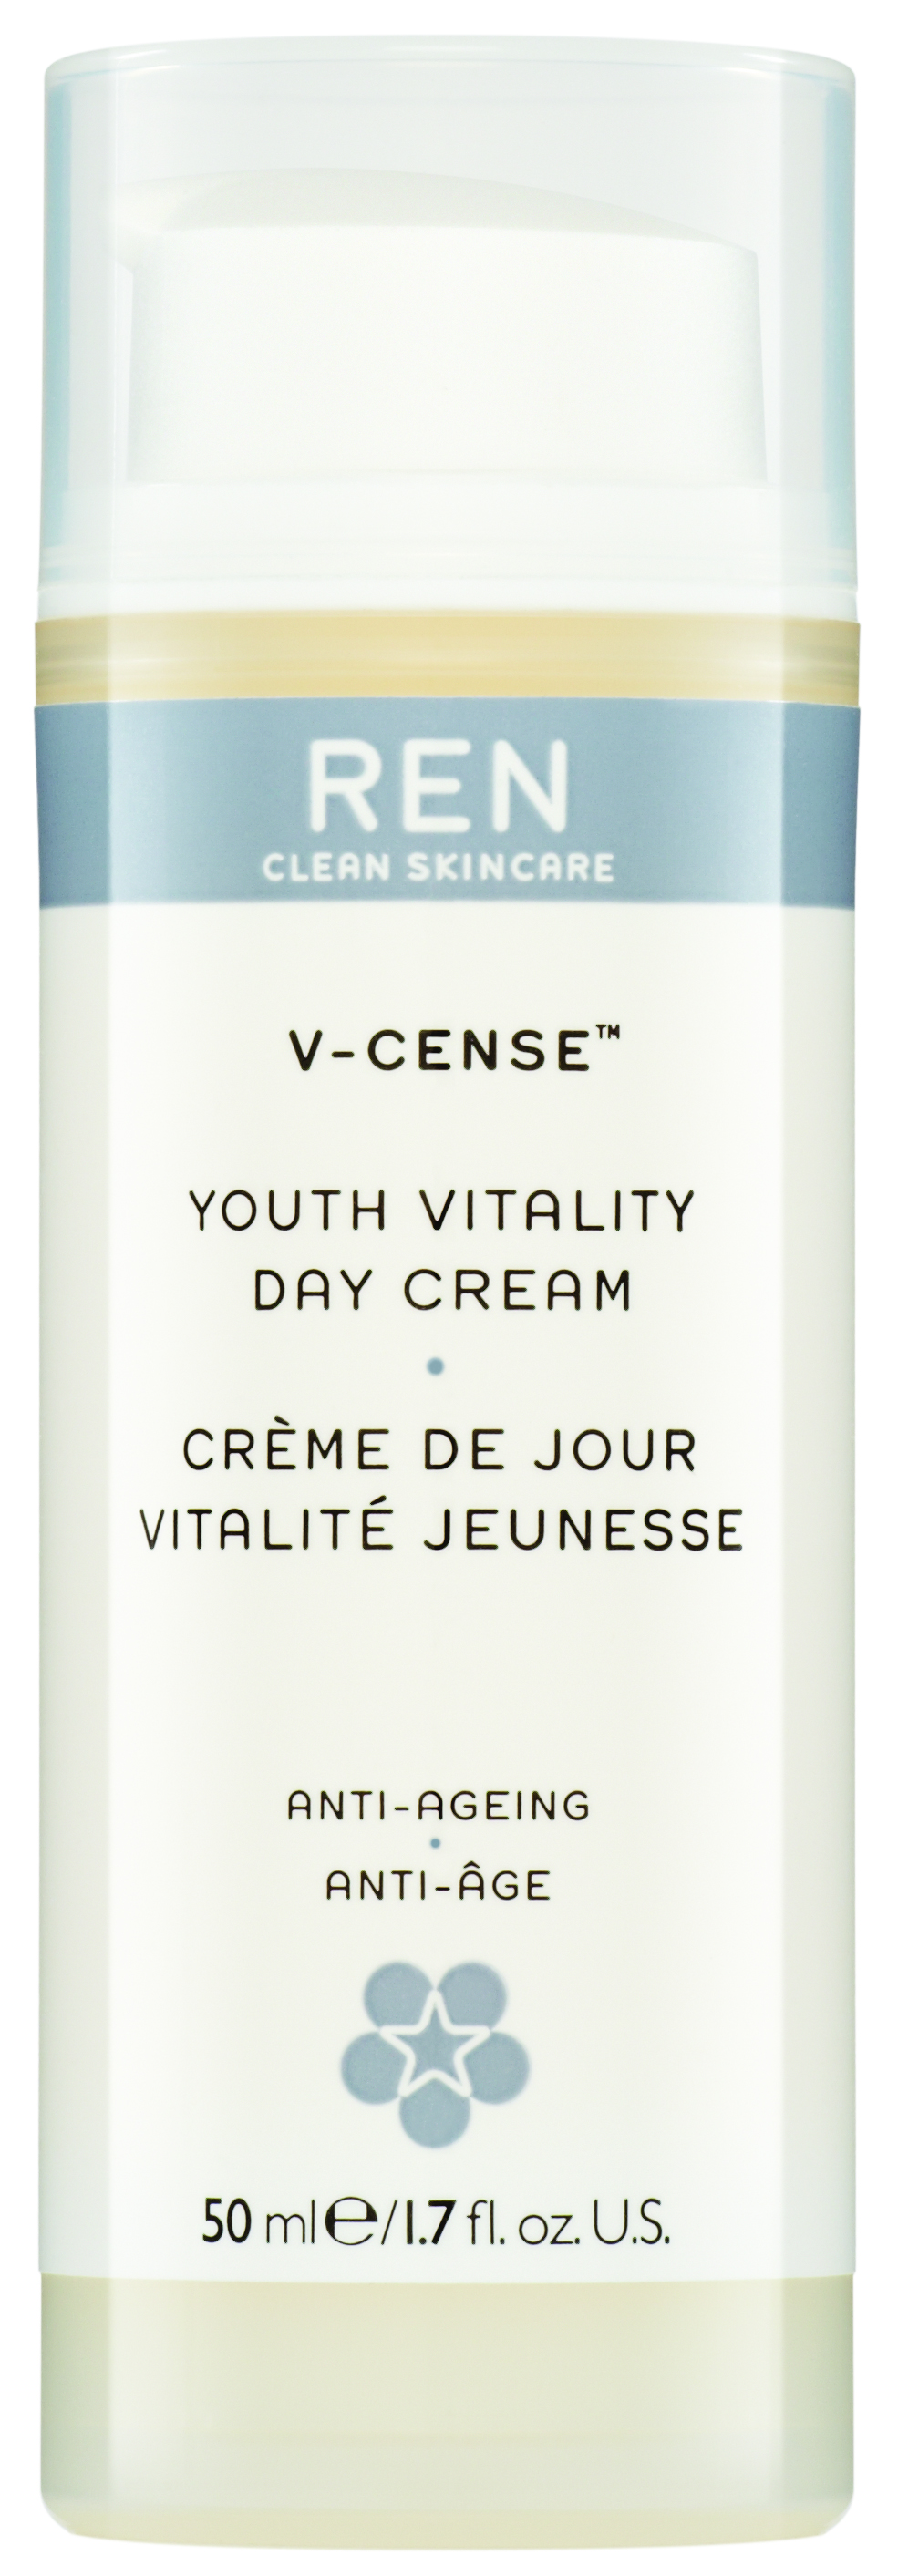 REN Anti-Age V-cense Youth Vitality Day Cream